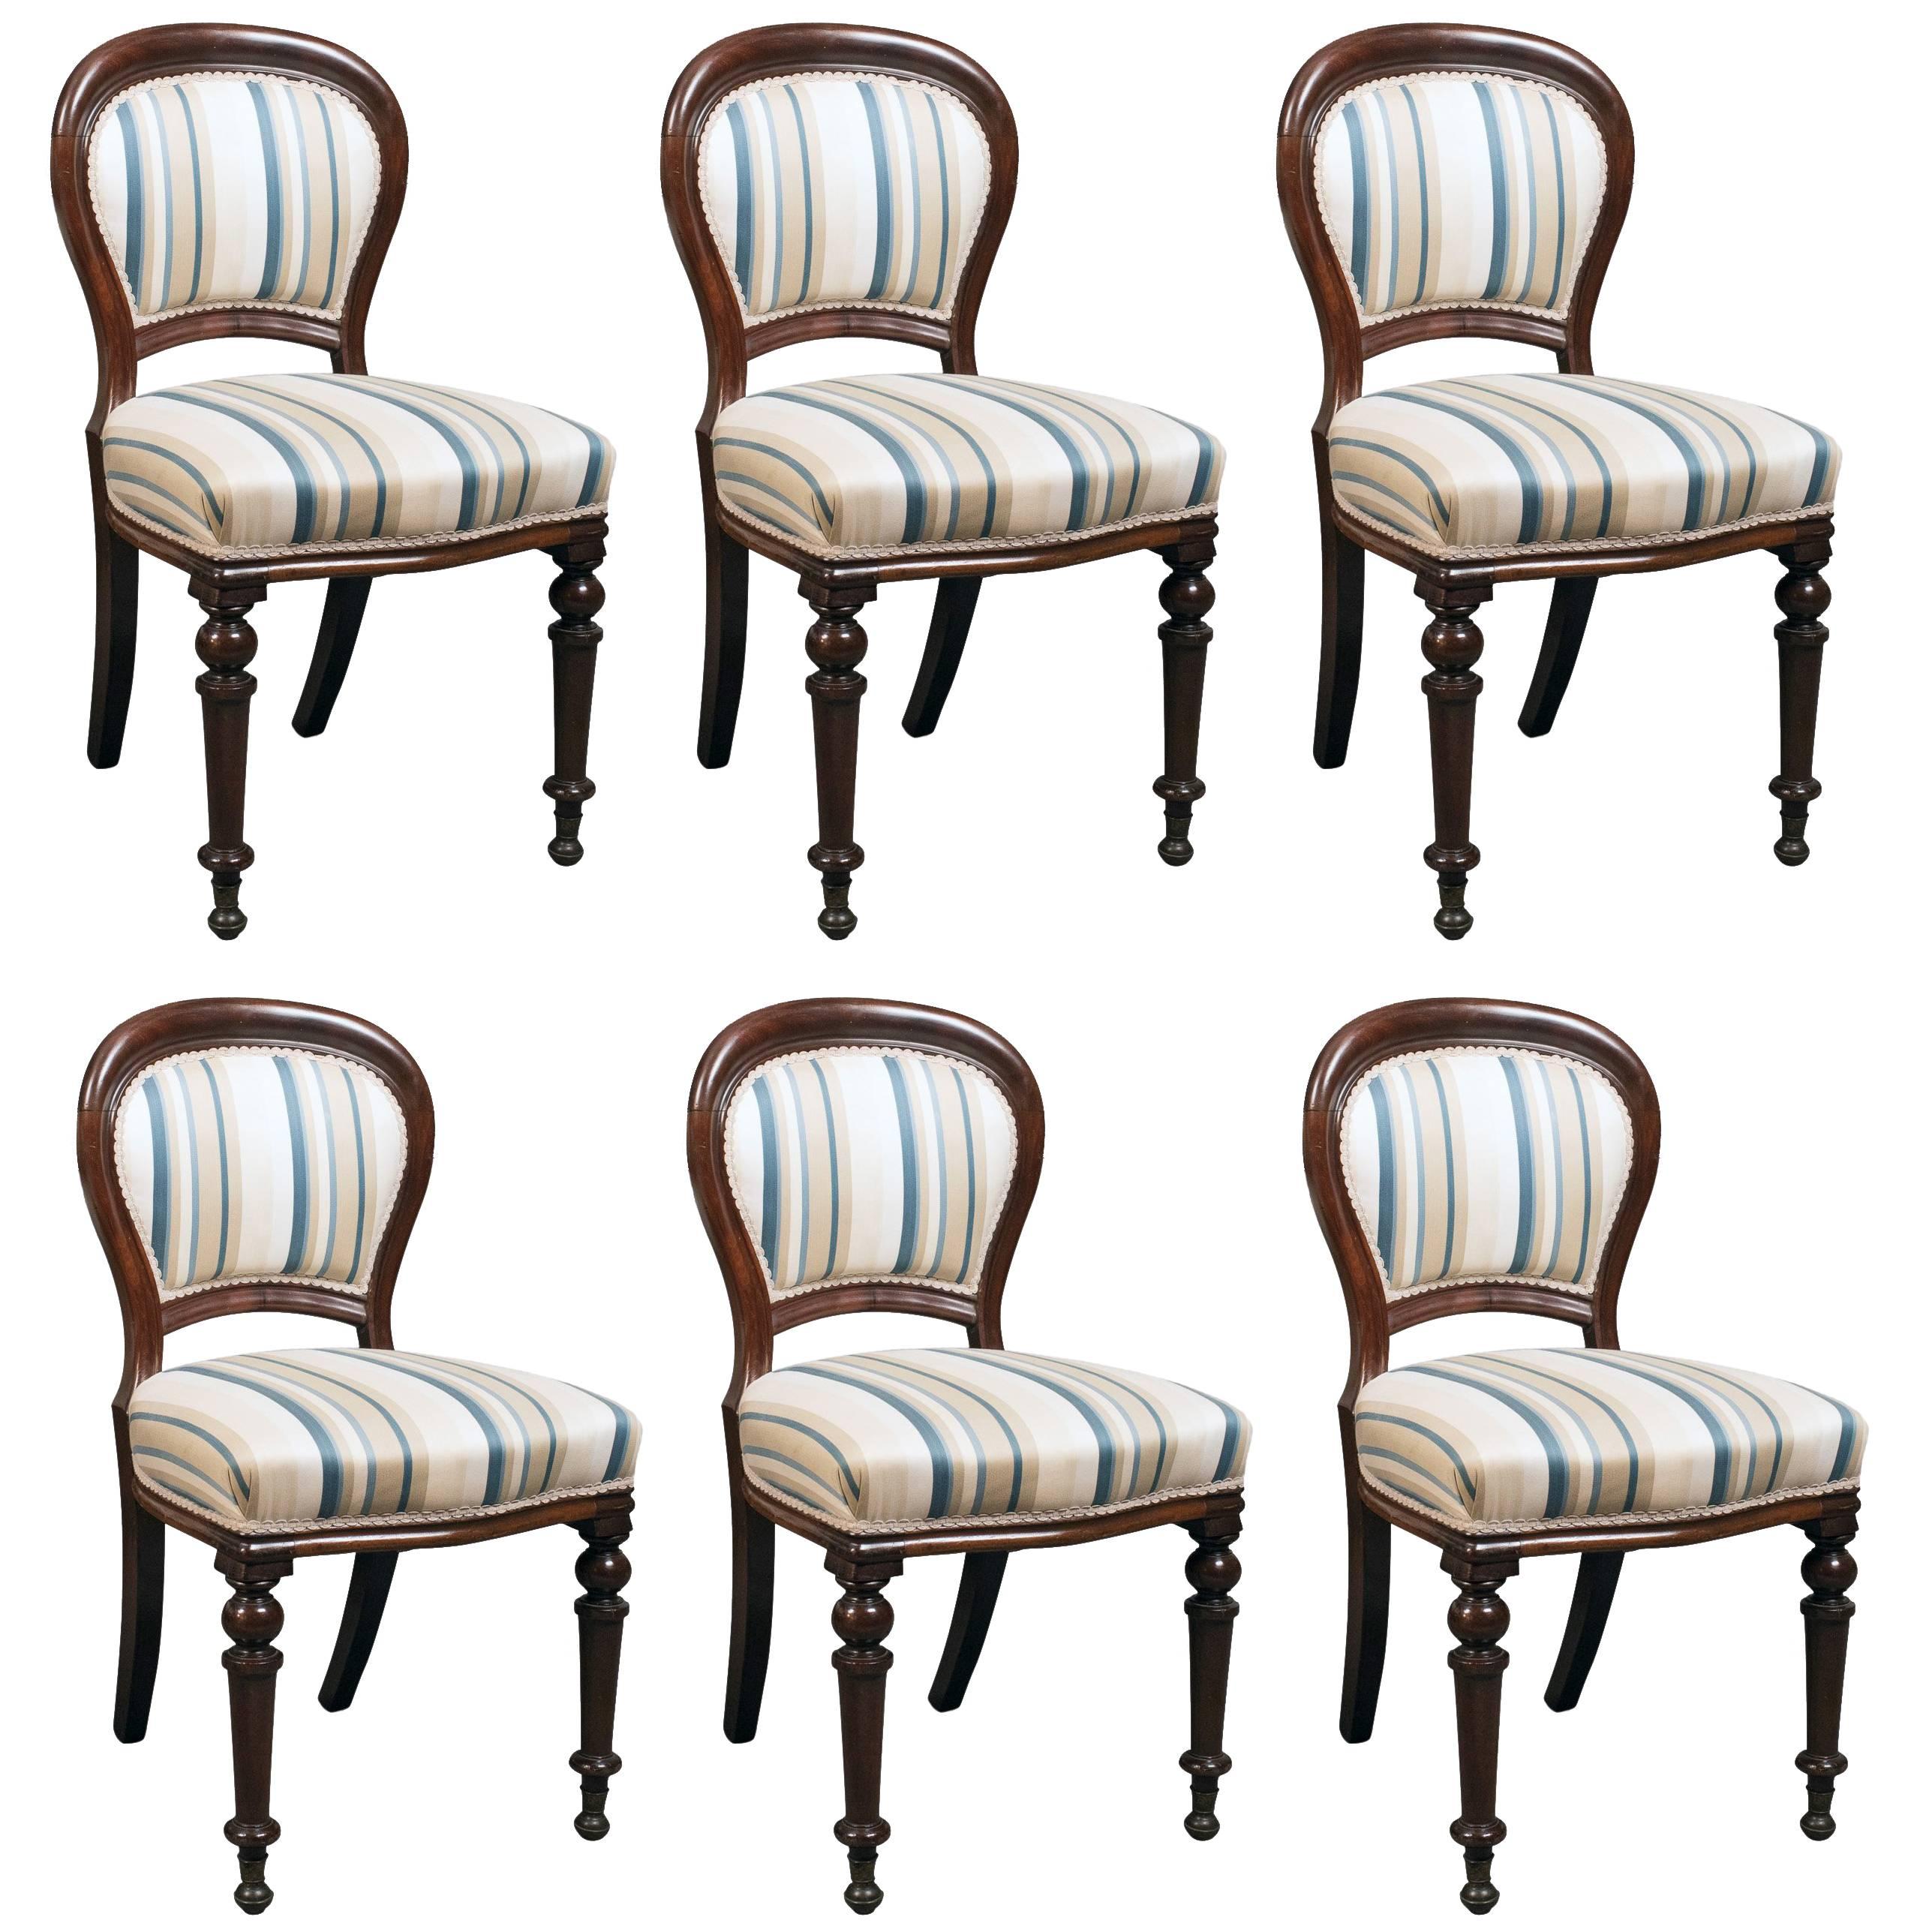 Set of Six Antique Dining Chairs, English, Victorian, Mahogany, circa 1860